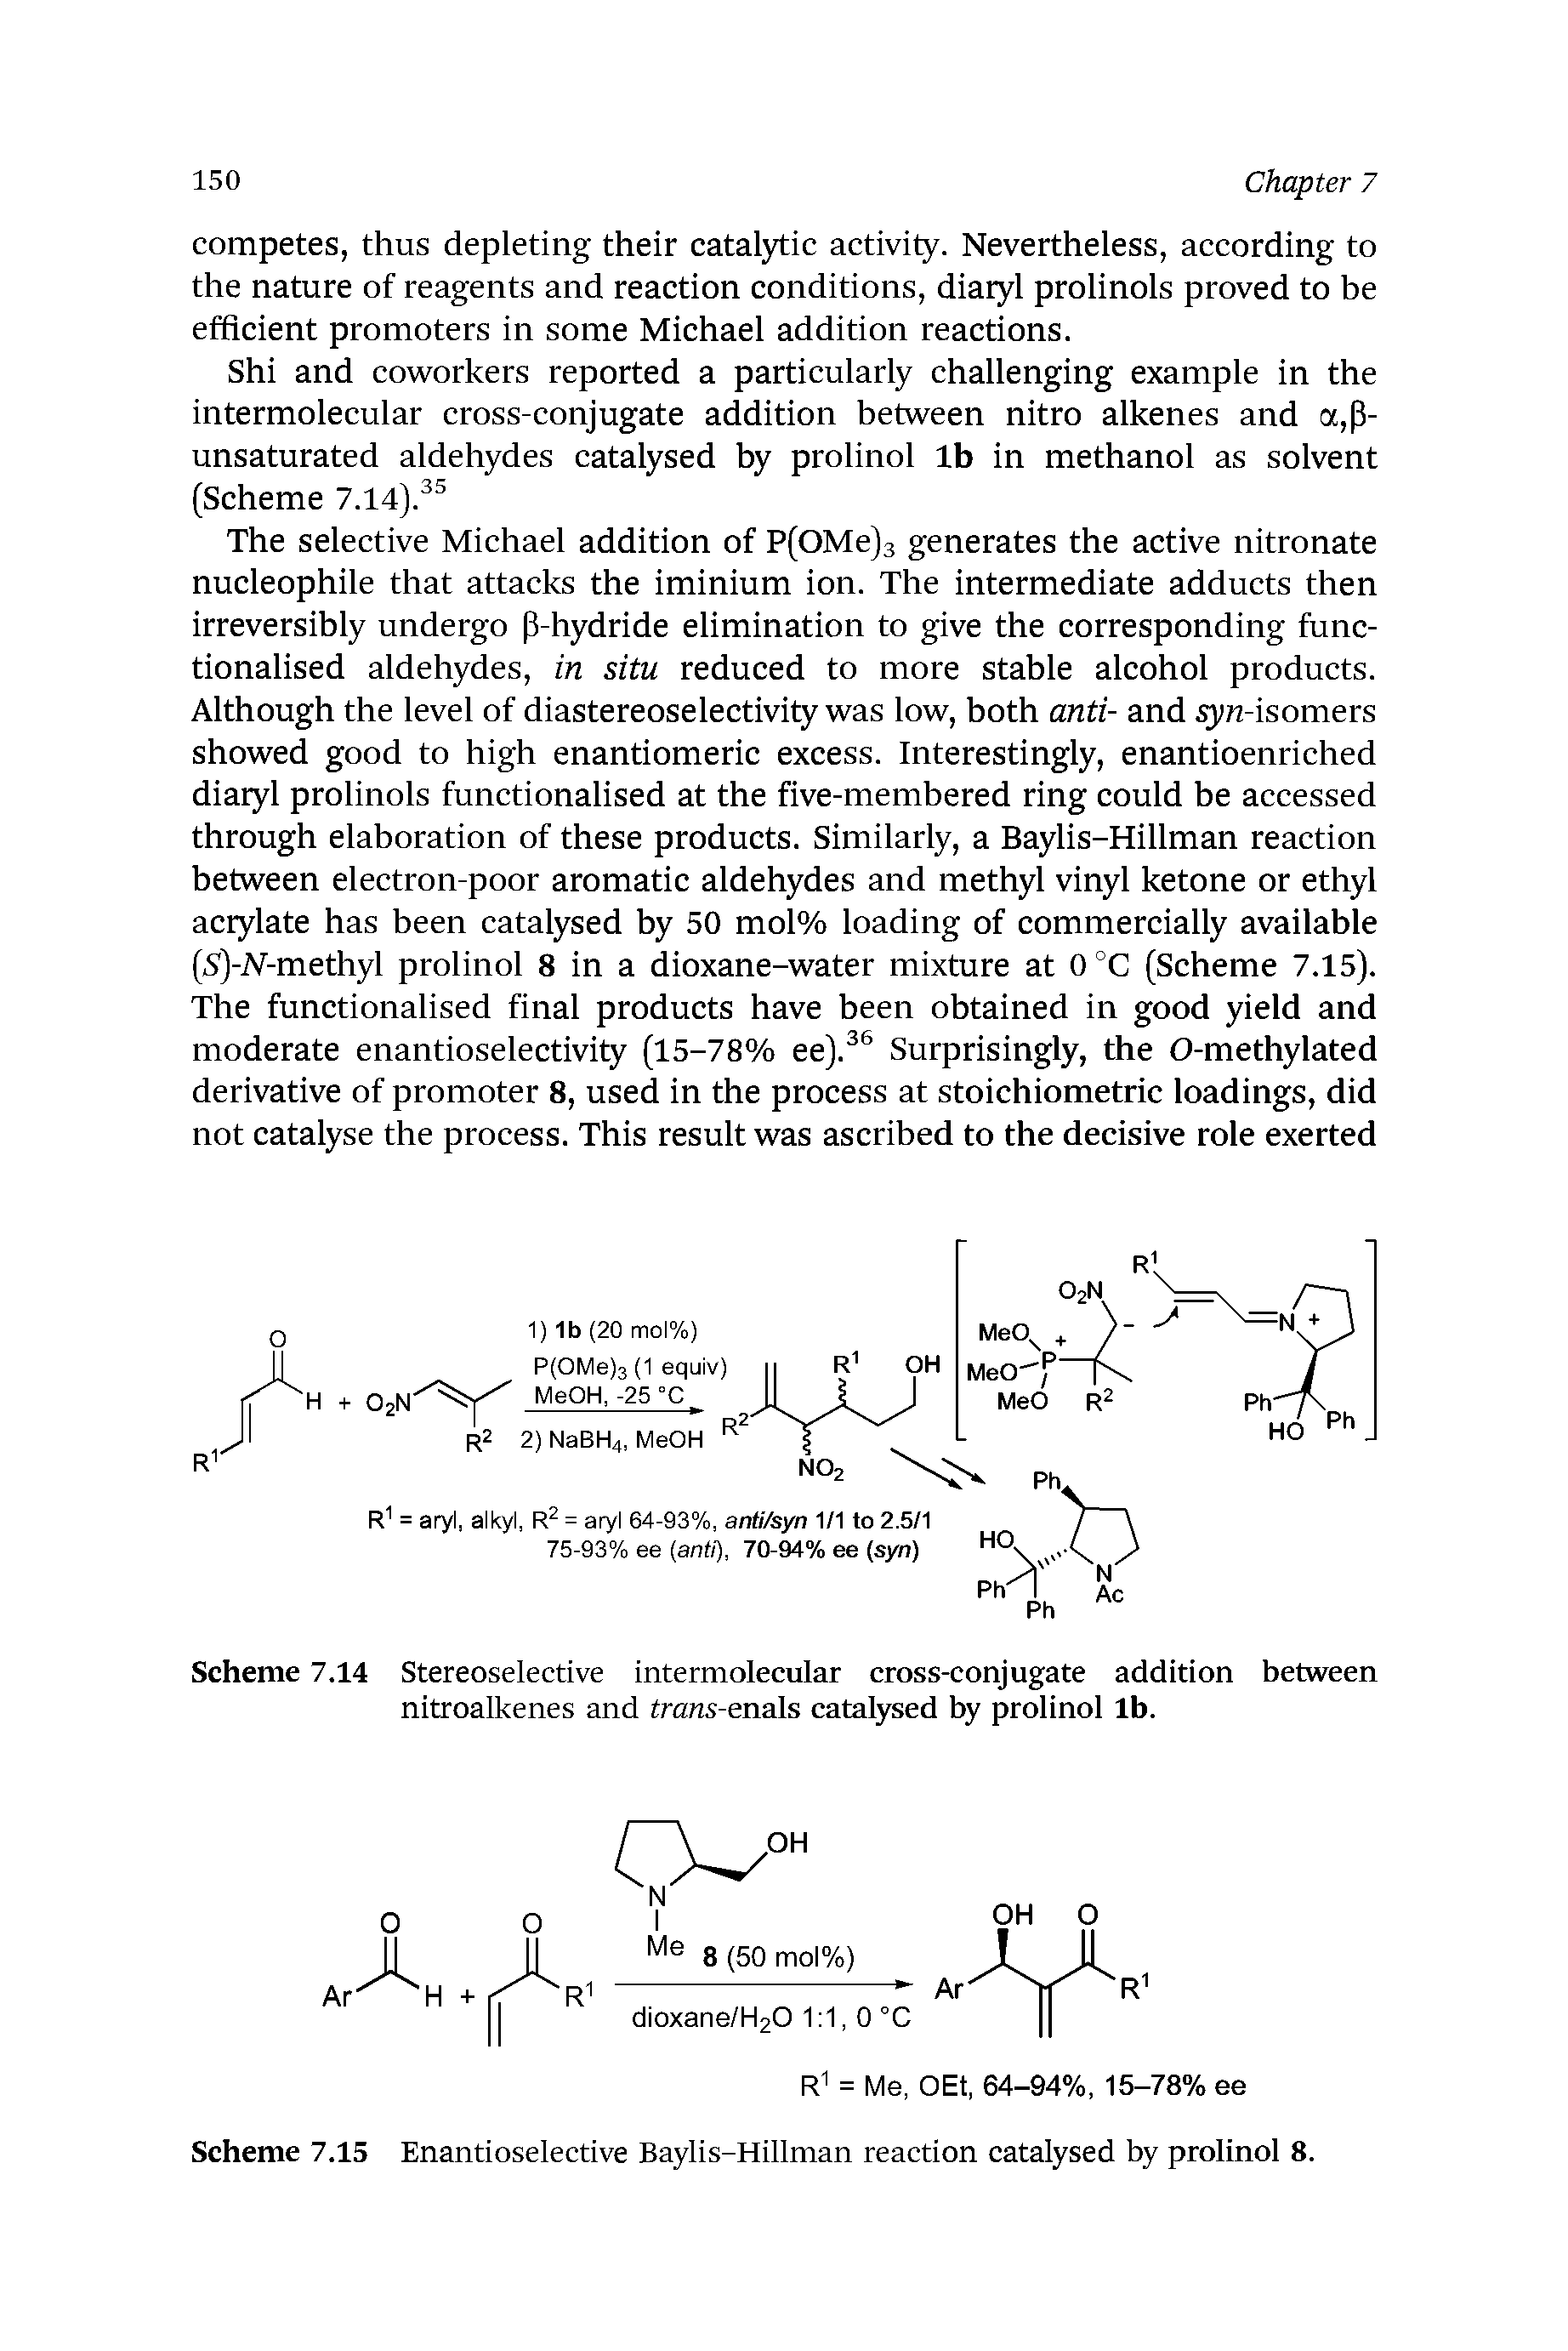 Scheme 7.15 Enantioselective Baylis-Hillman reaction catalysed by prolinol 8.